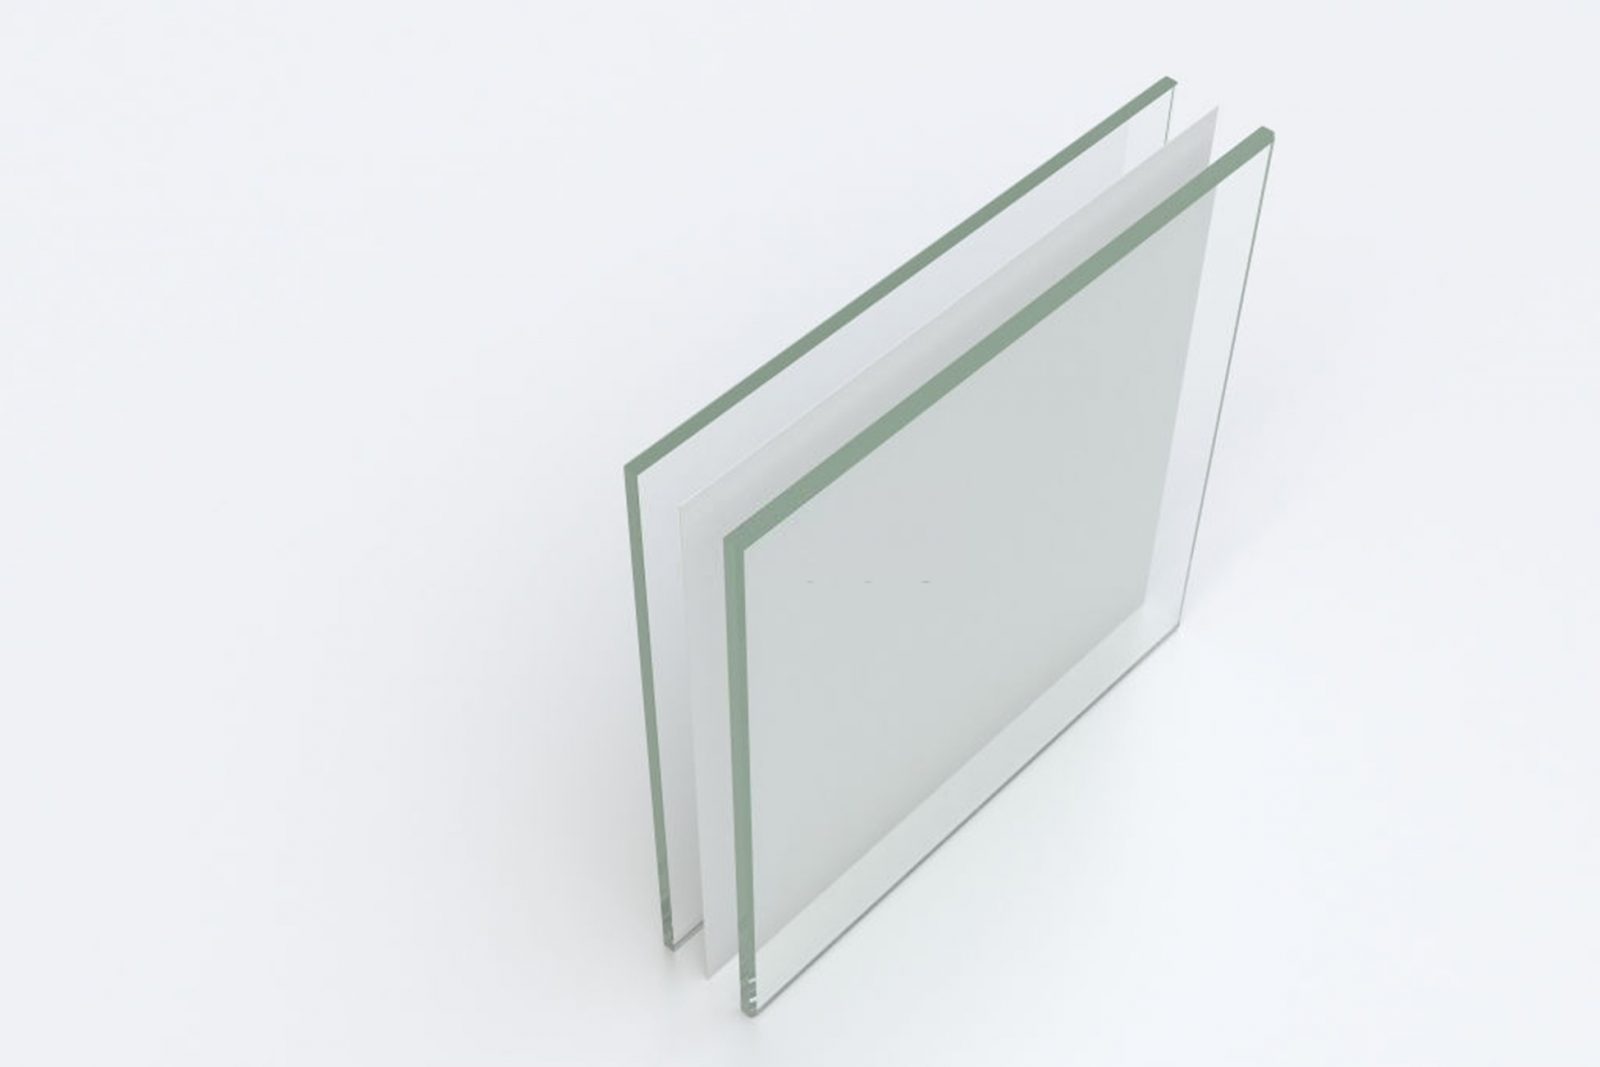 Lexan Vs Plexiglass